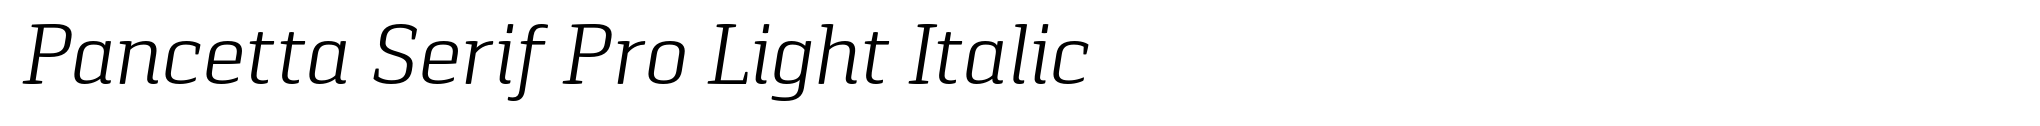 Pancetta Serif Pro Light Italic image